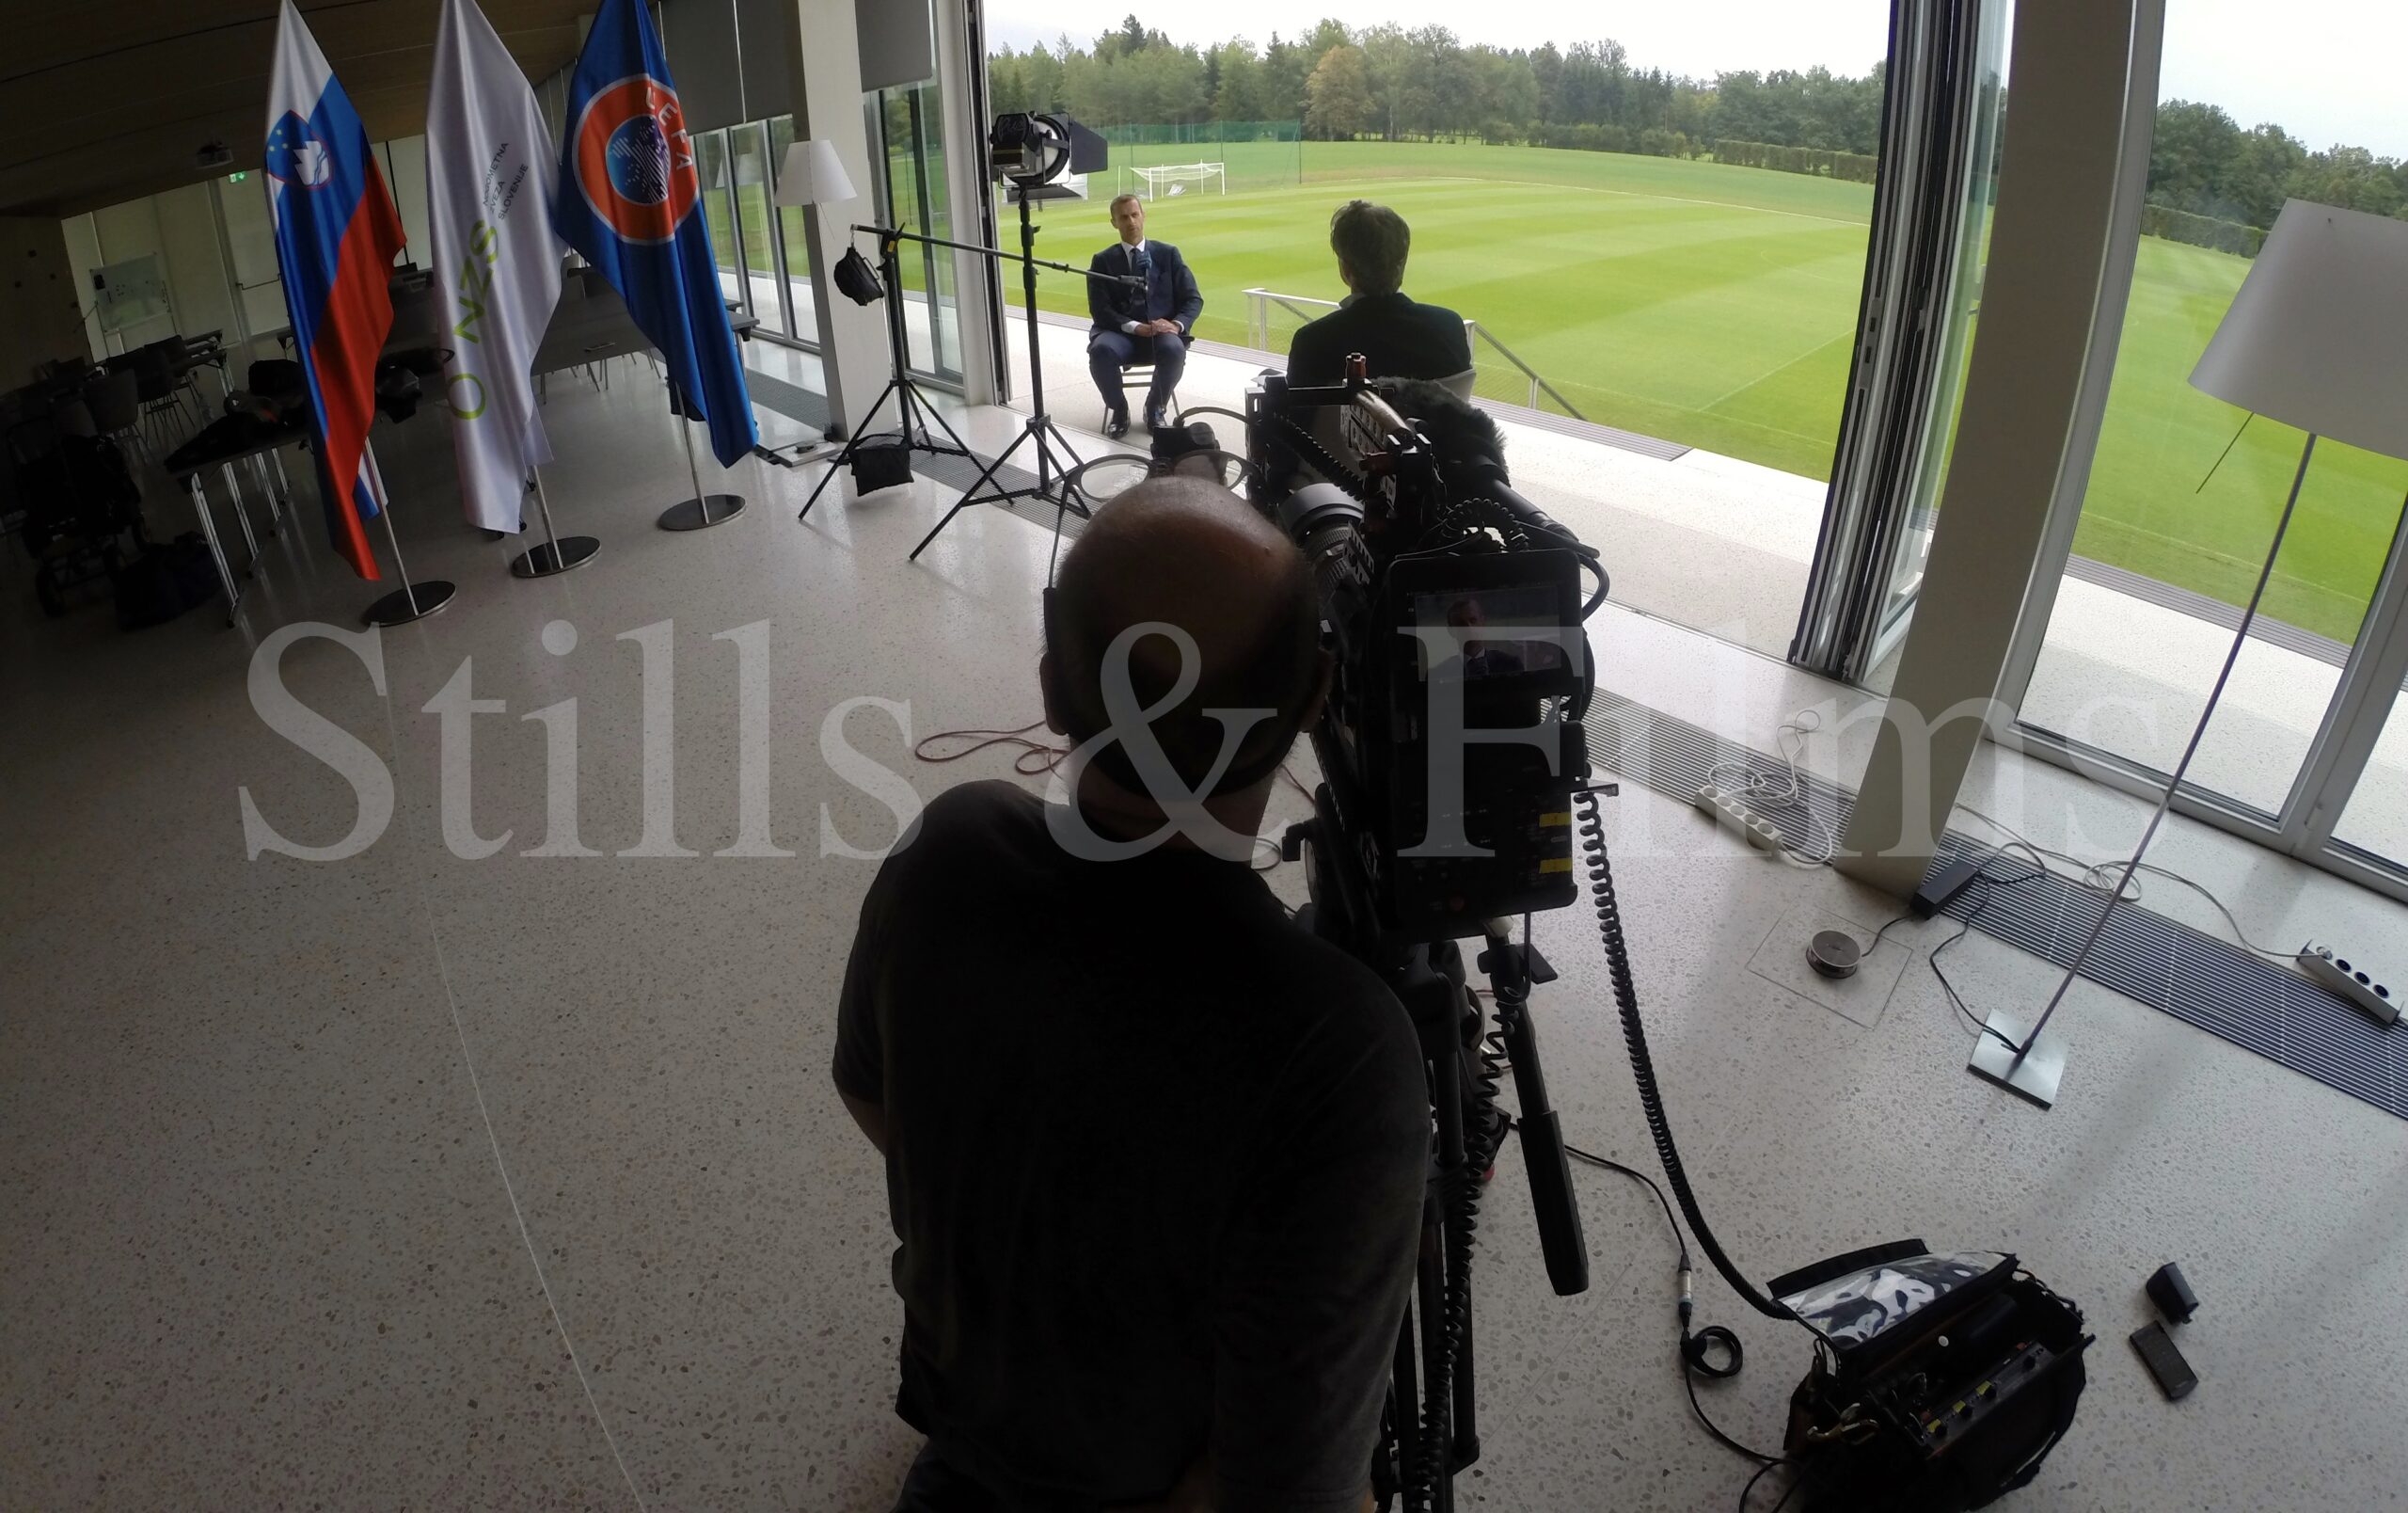 Here we were interviewing UEFA President Aleksander Ceferin for ARD